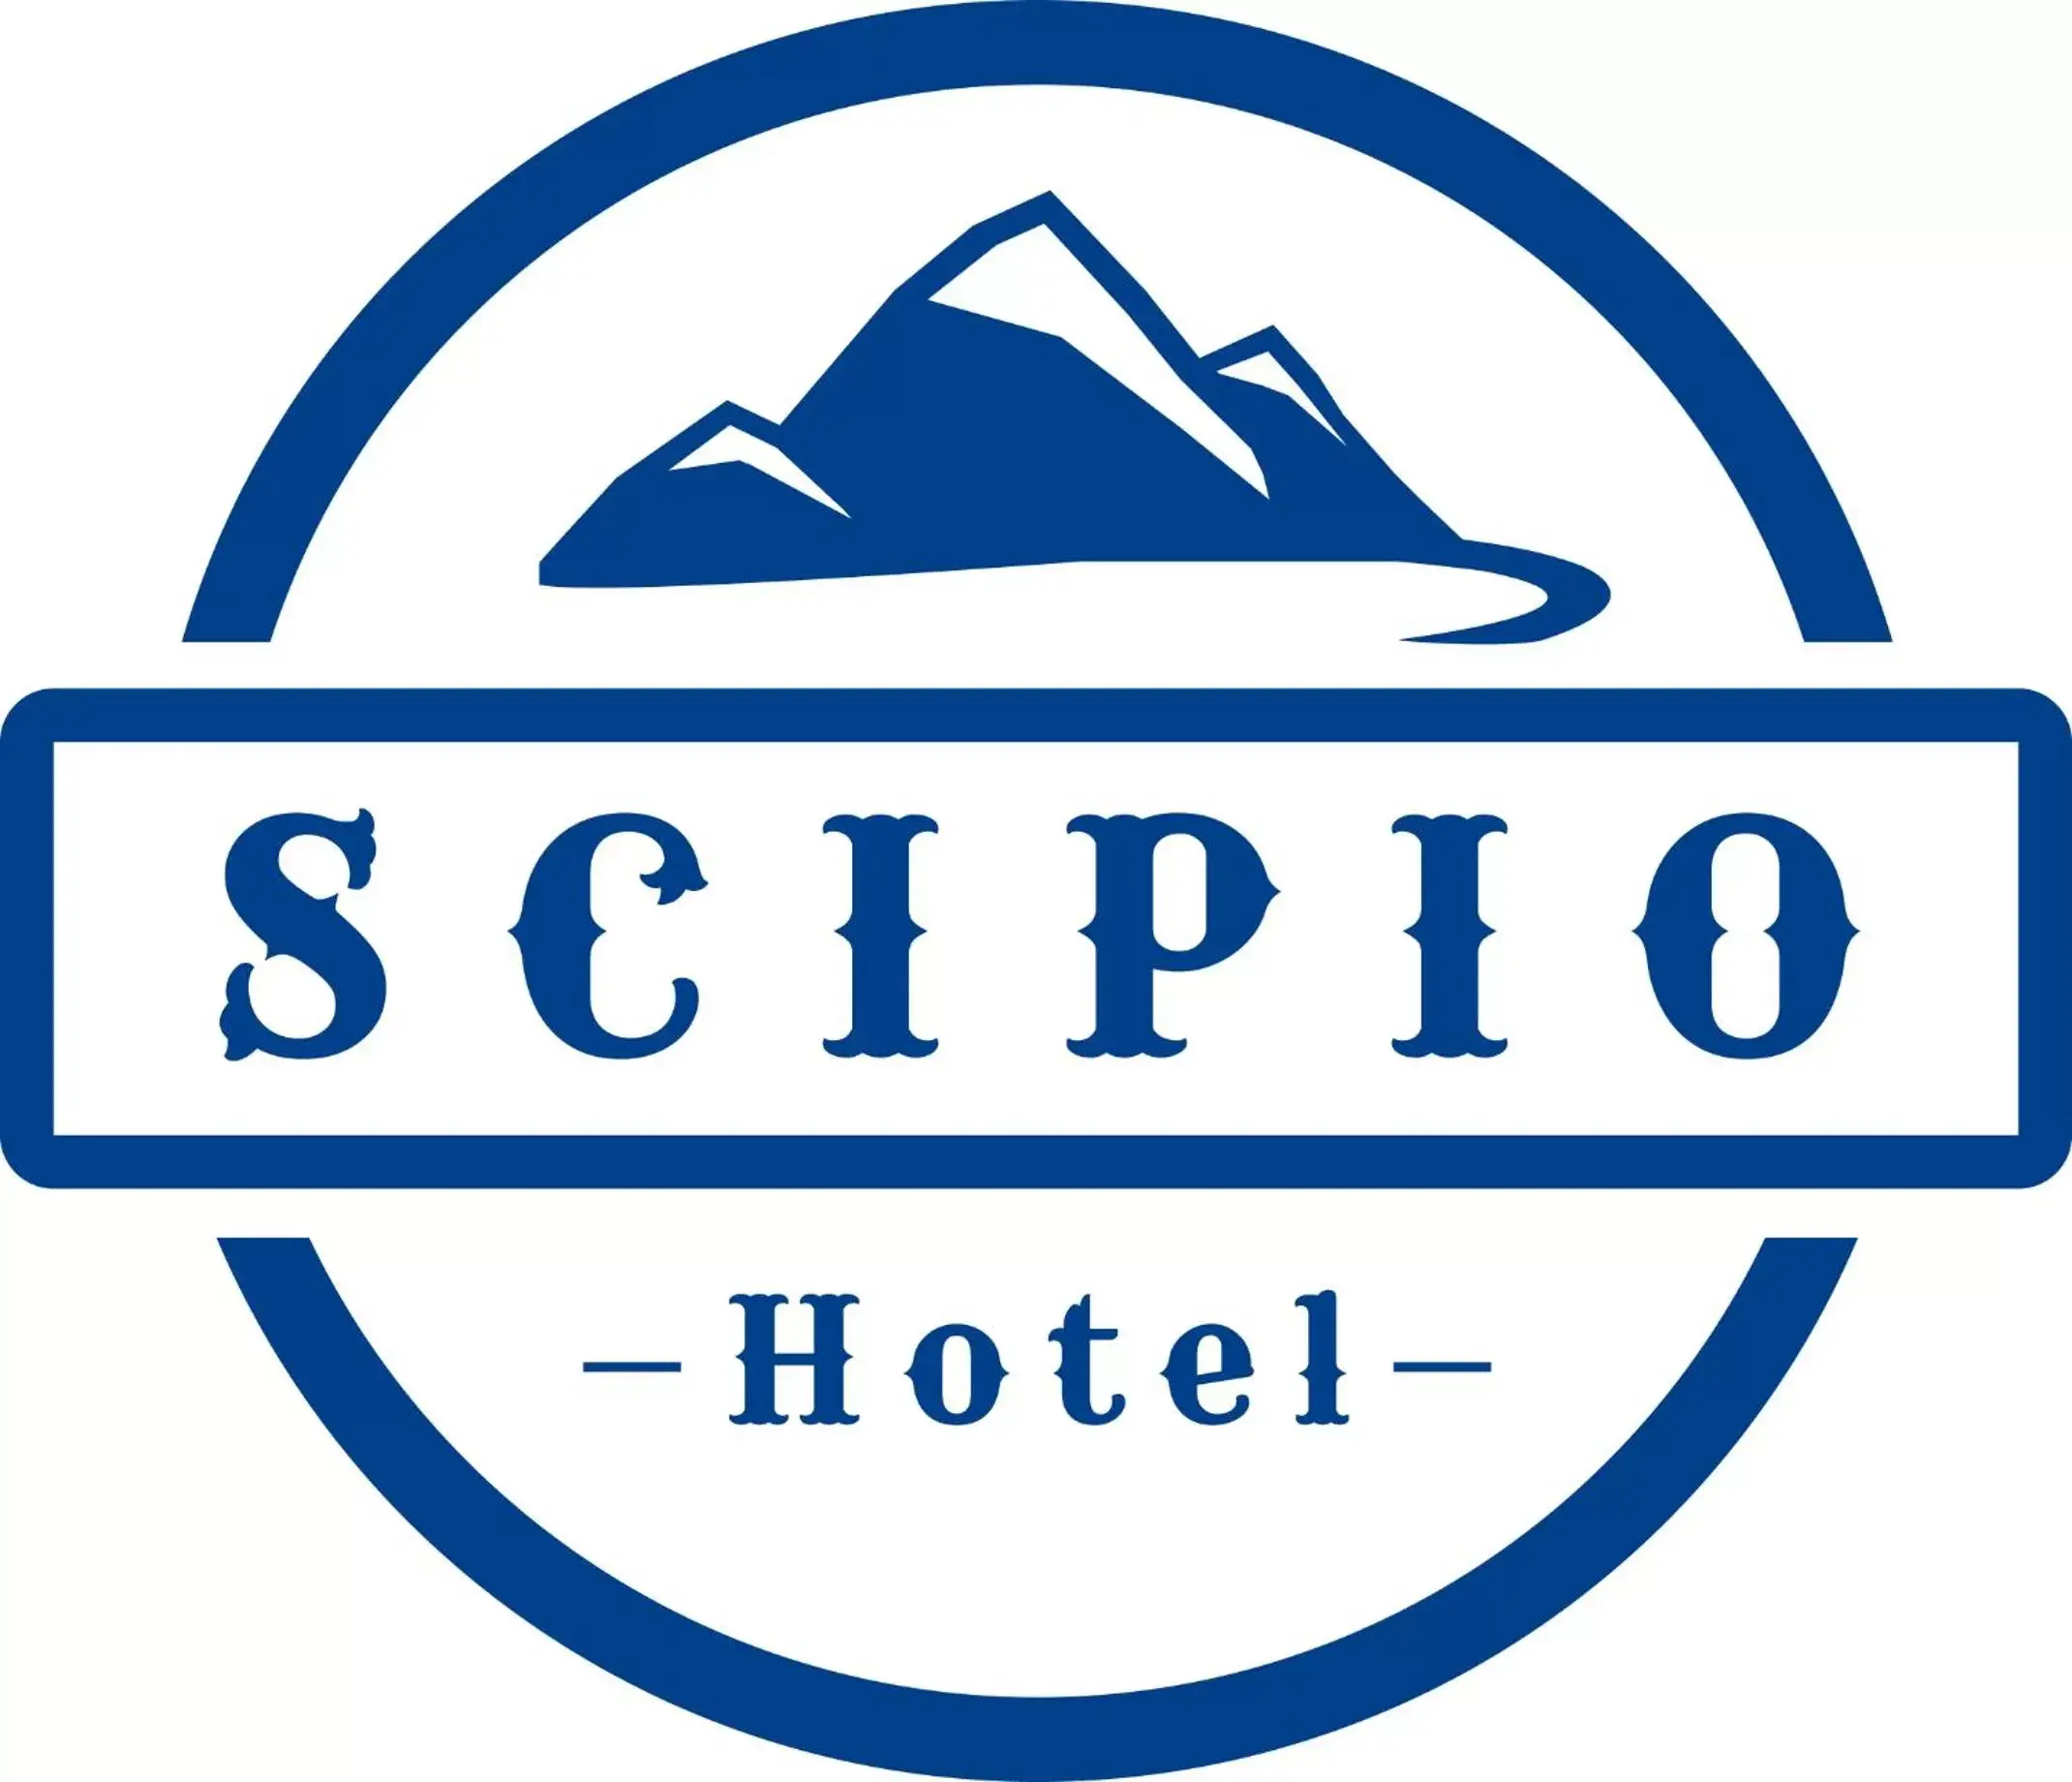 Property logo or sign in Scipio Hotel